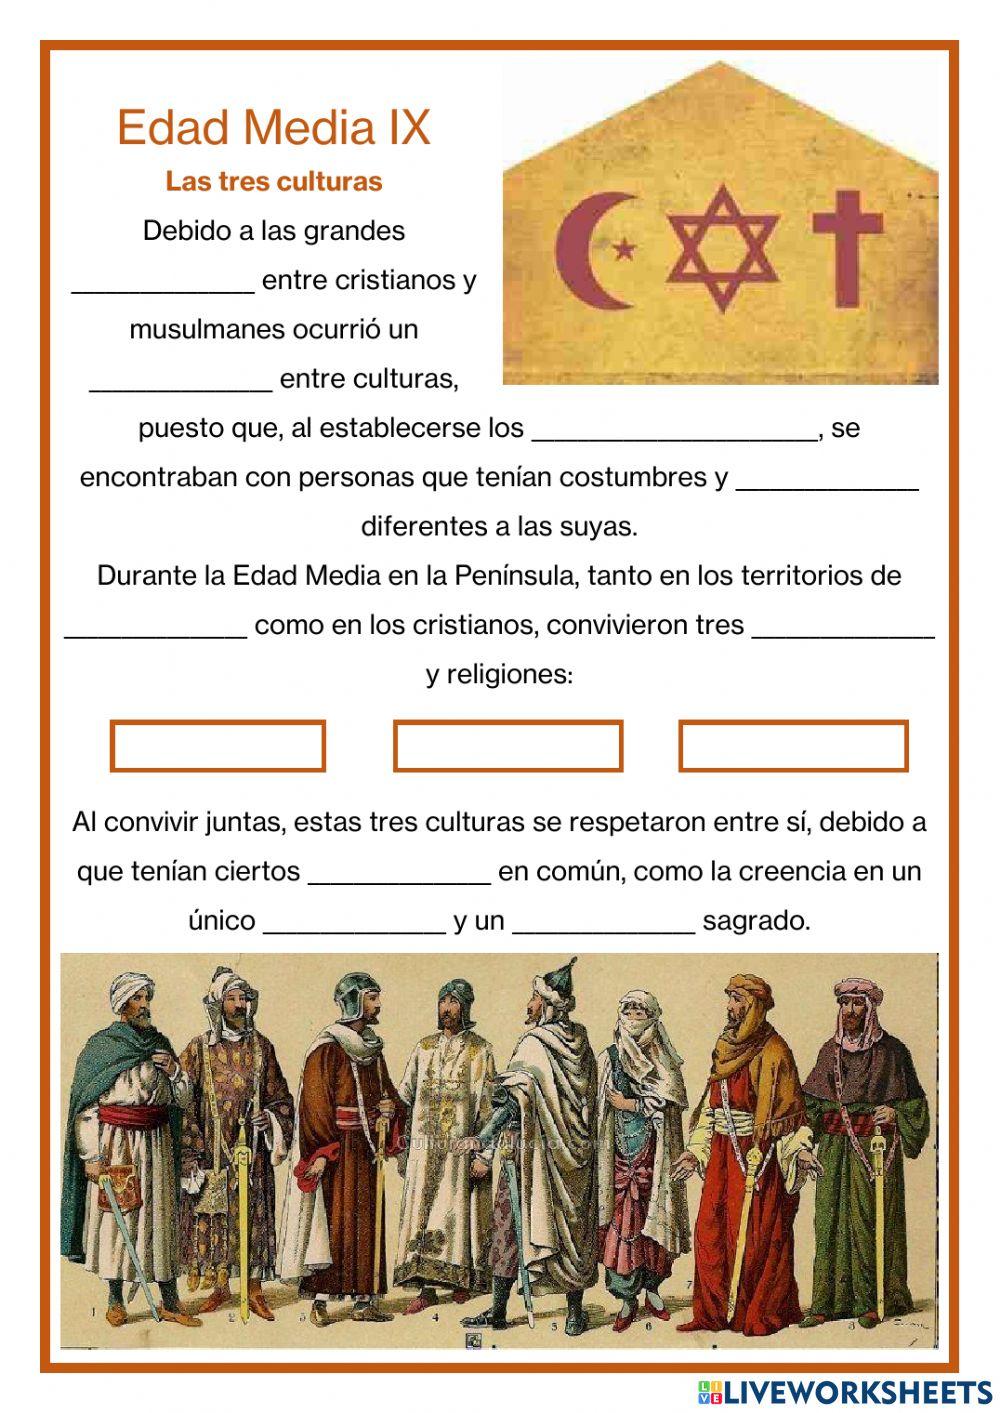 Edad Media IX - Las tres culturas